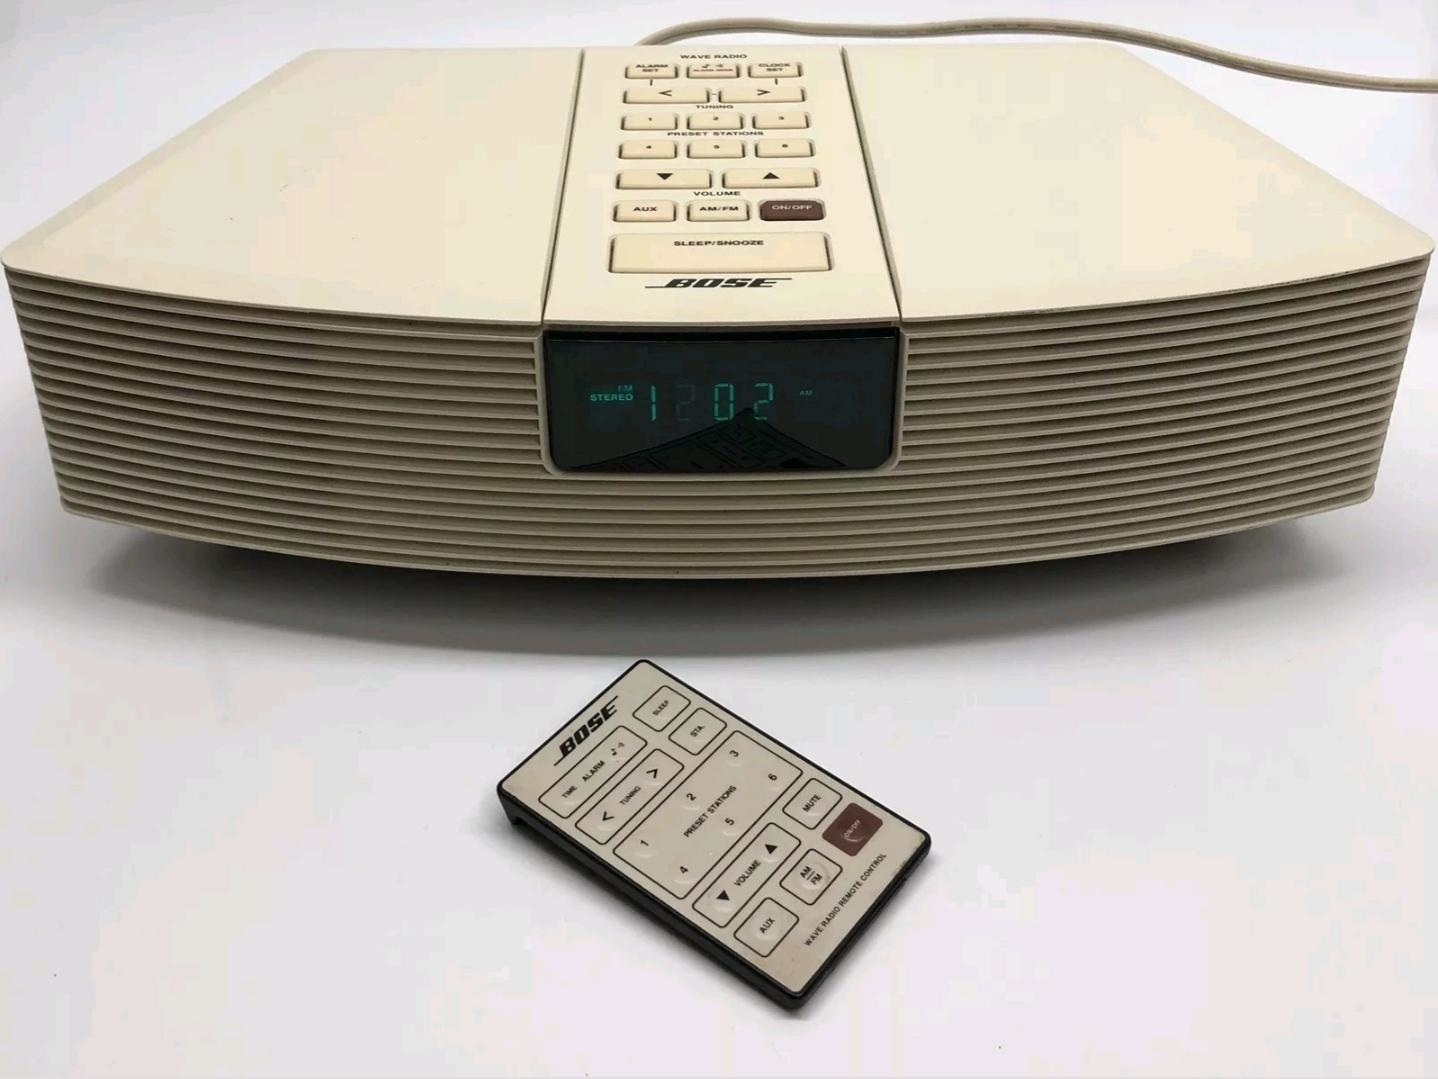 a Bose radio system